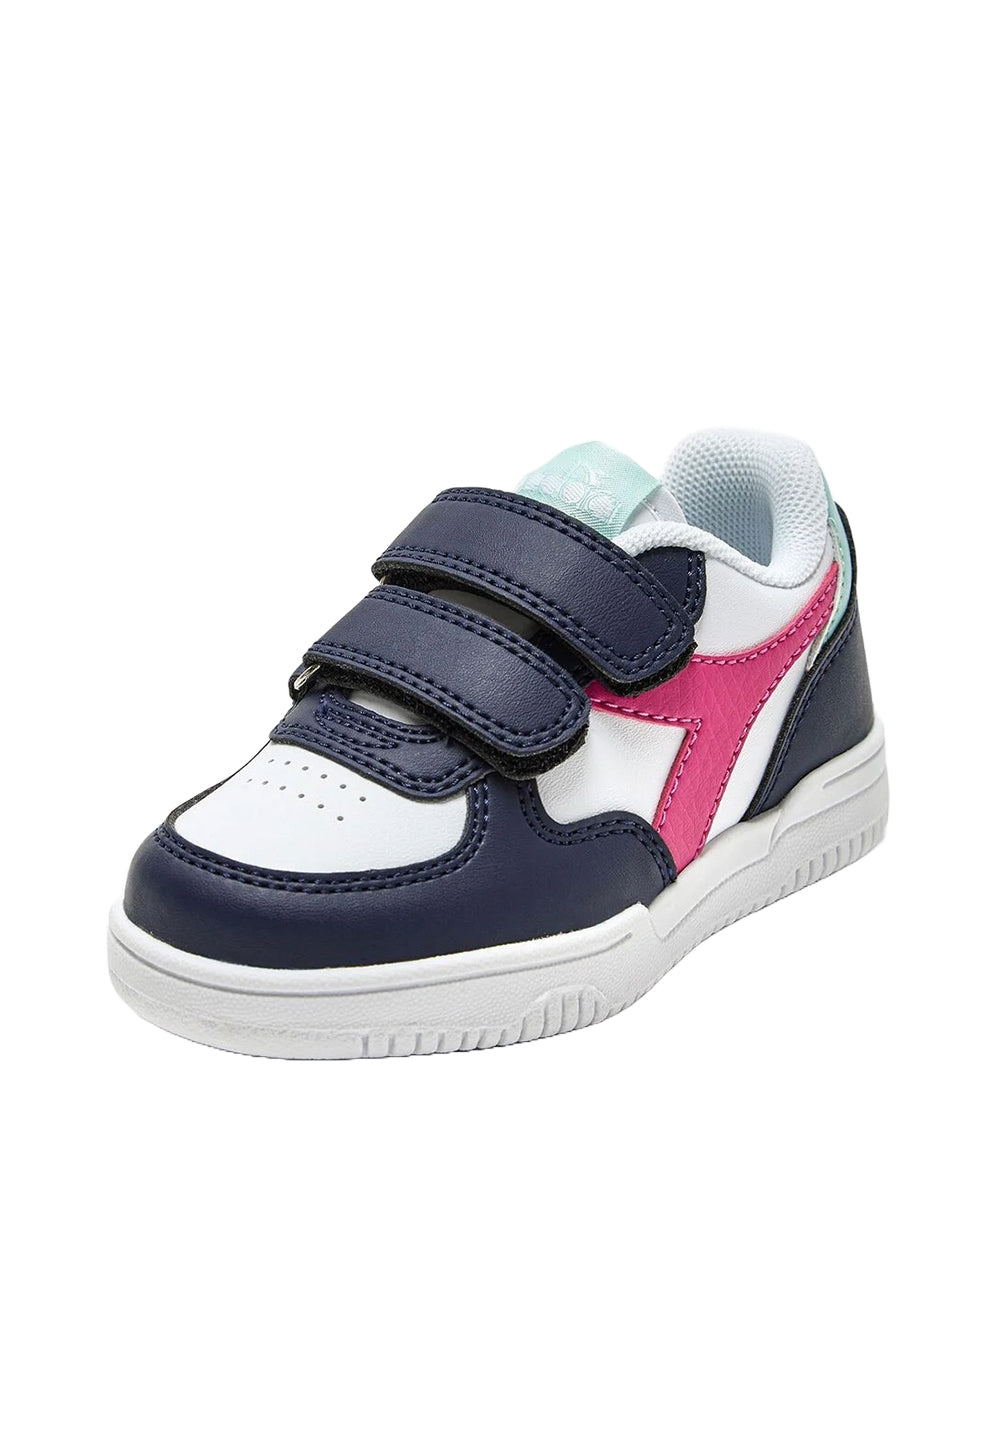 White-fuchsia shoes for newborn girls